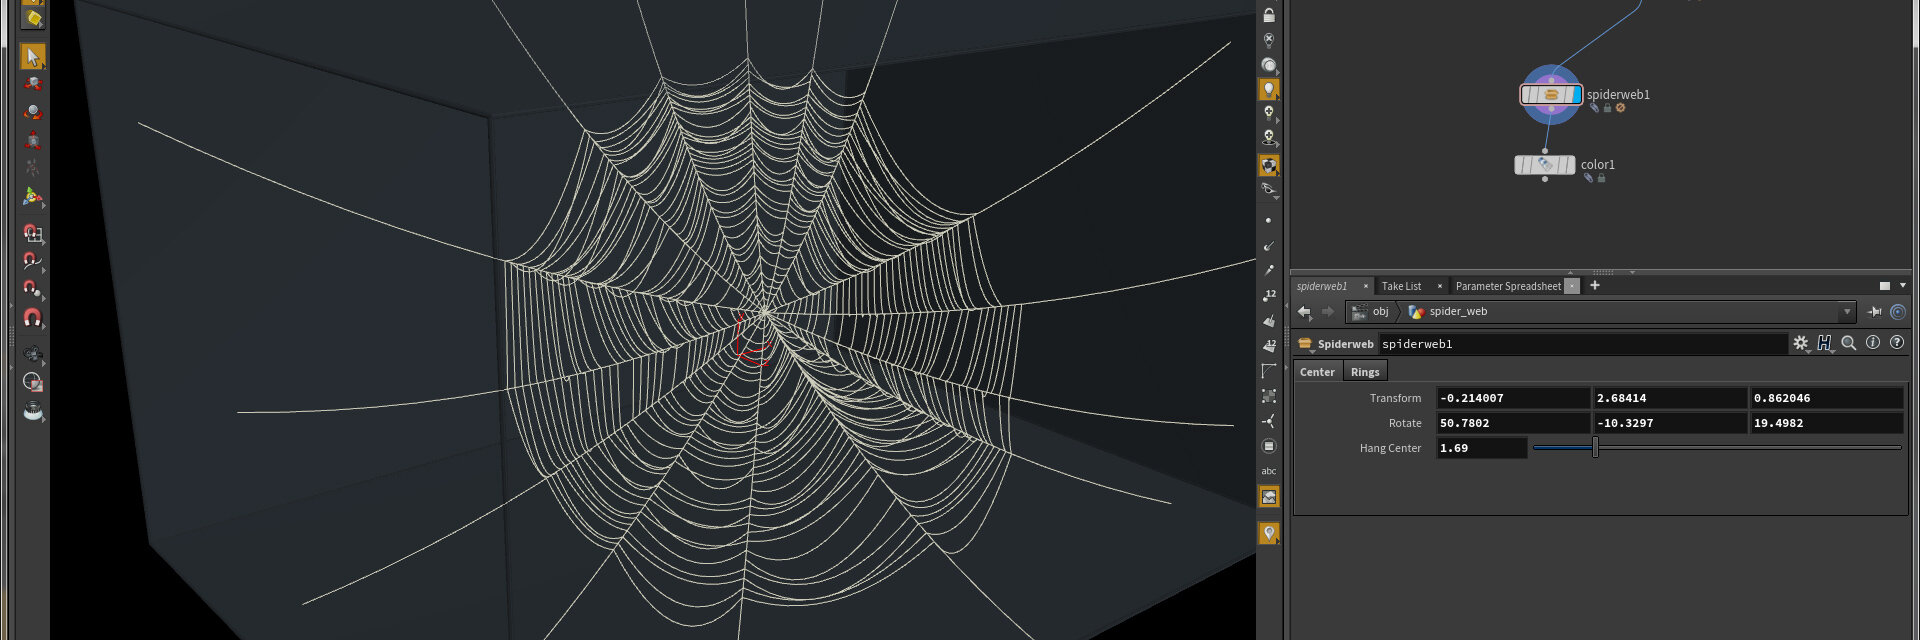 SideFx Houdini Screenshot with spider web